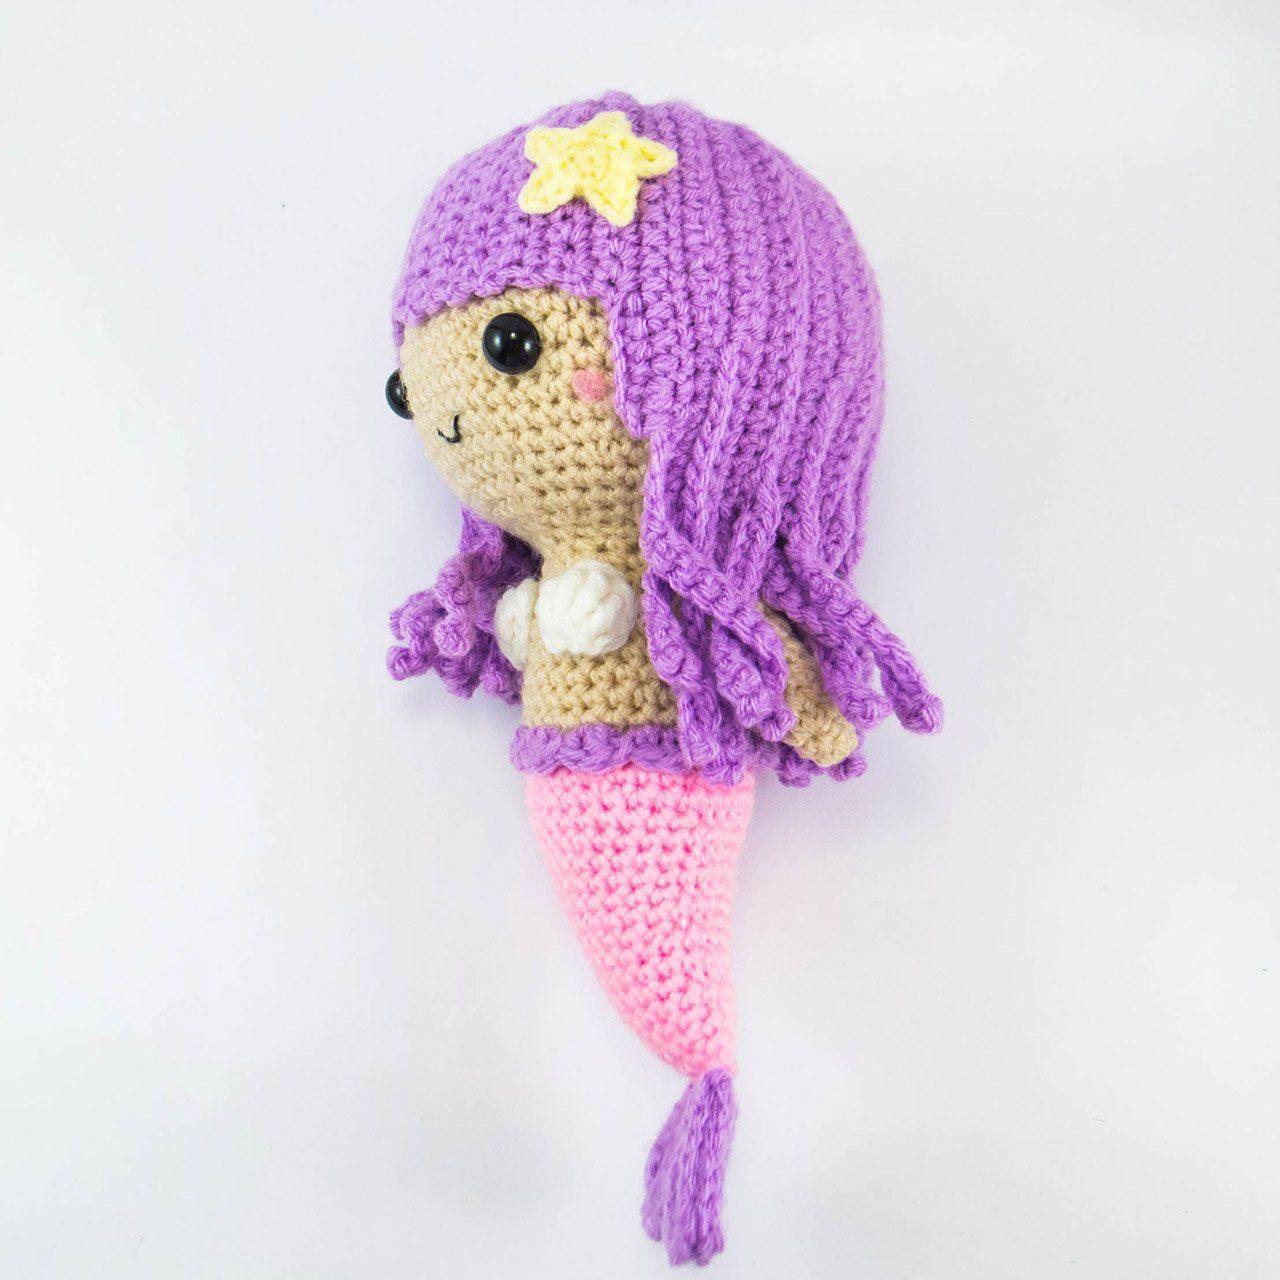 Mermaid doll amigurumi pattern